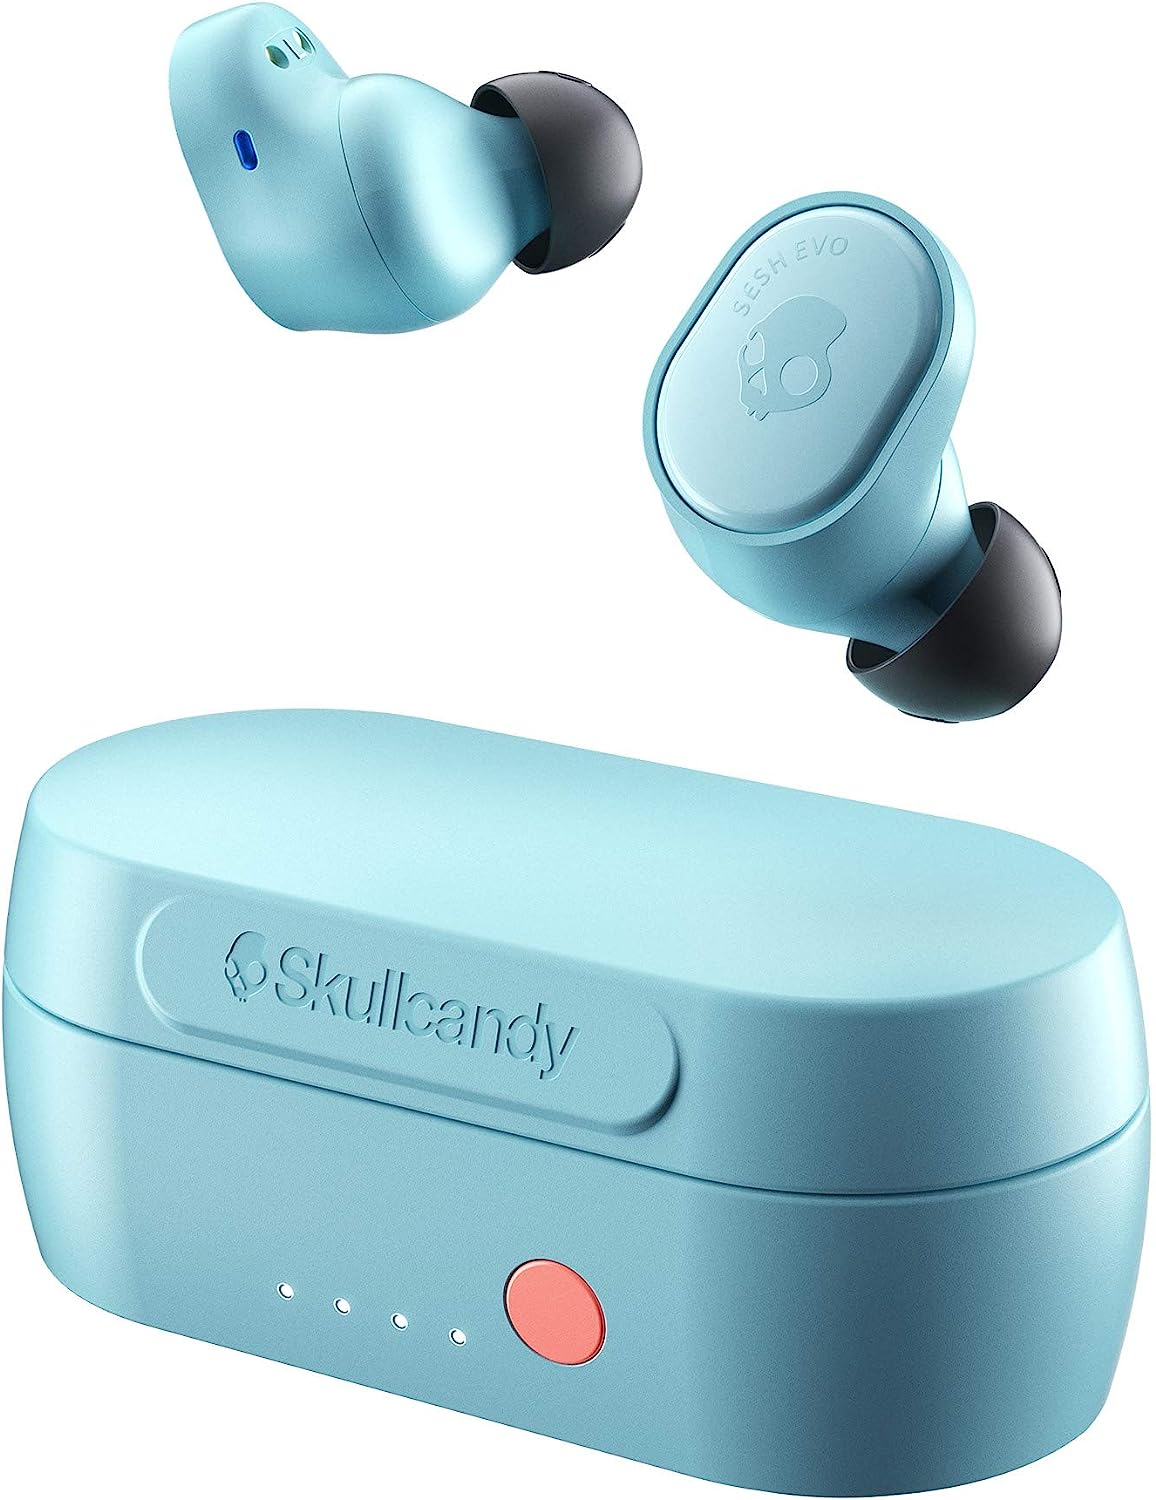 Skullcandy Sesh Evo True Wireless Earbuds - Blue - Refurbished Excellent